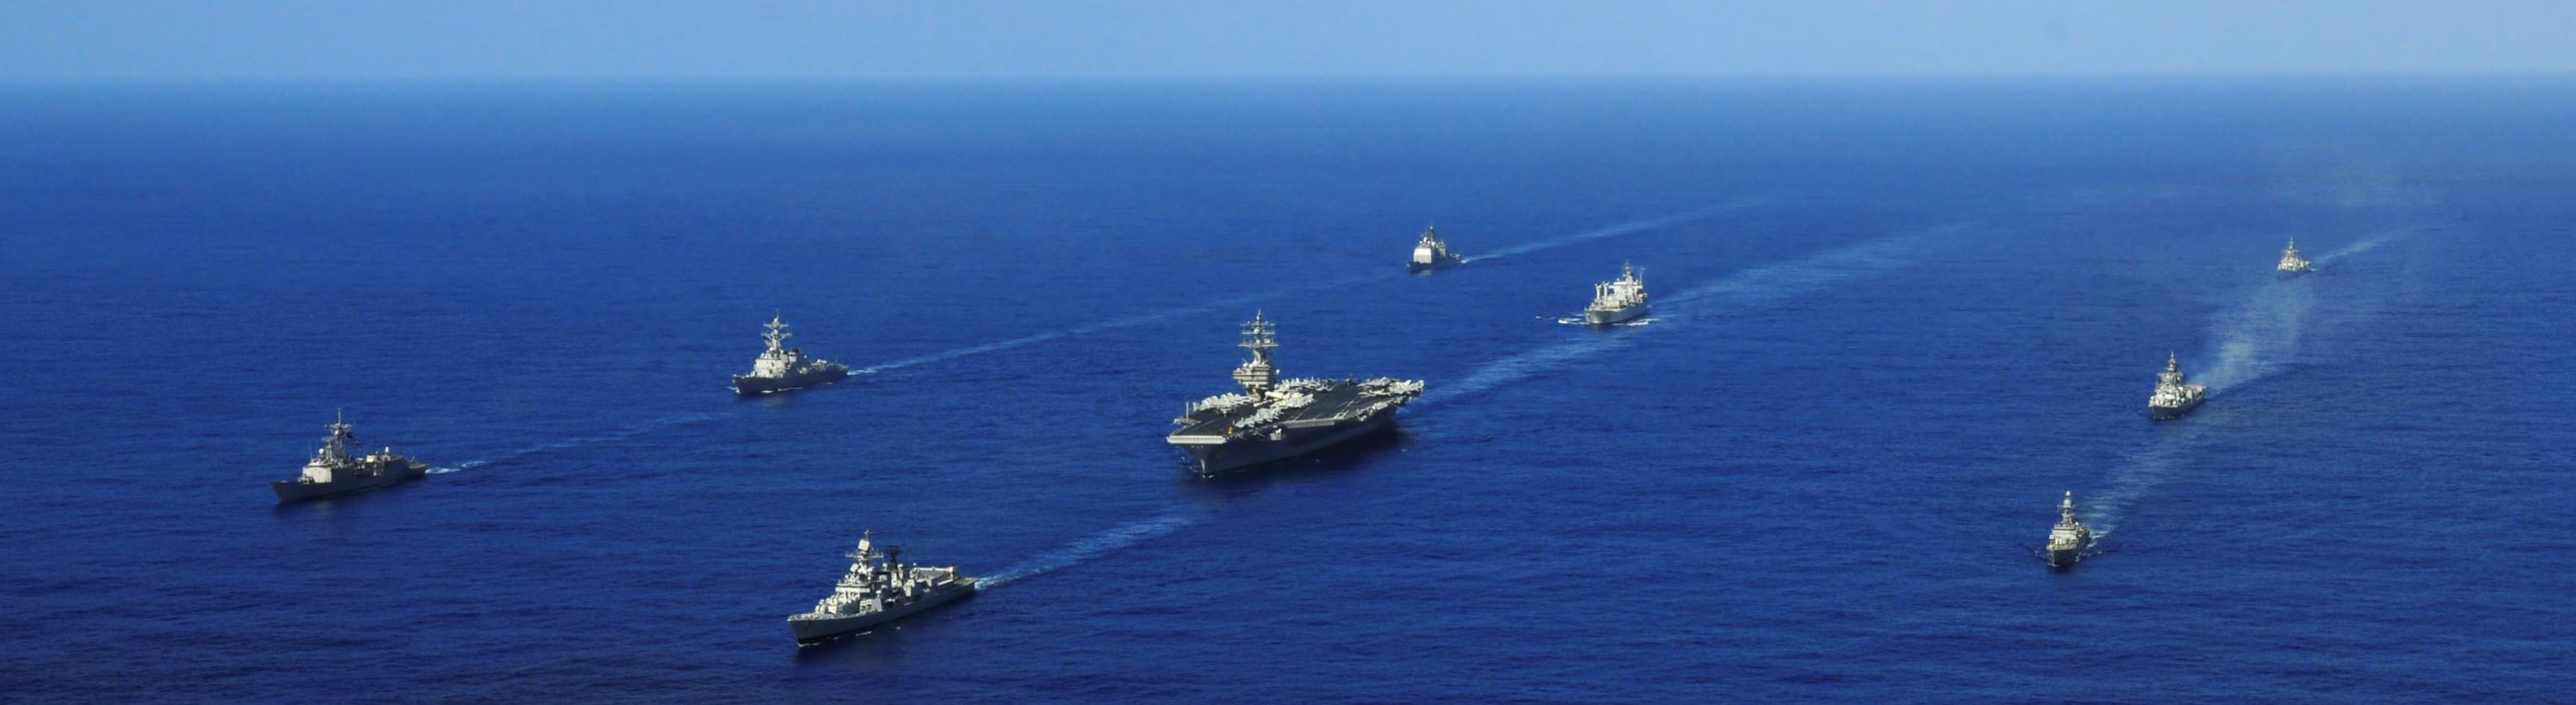 Navy Service Management, Integration and Transport Program Careers